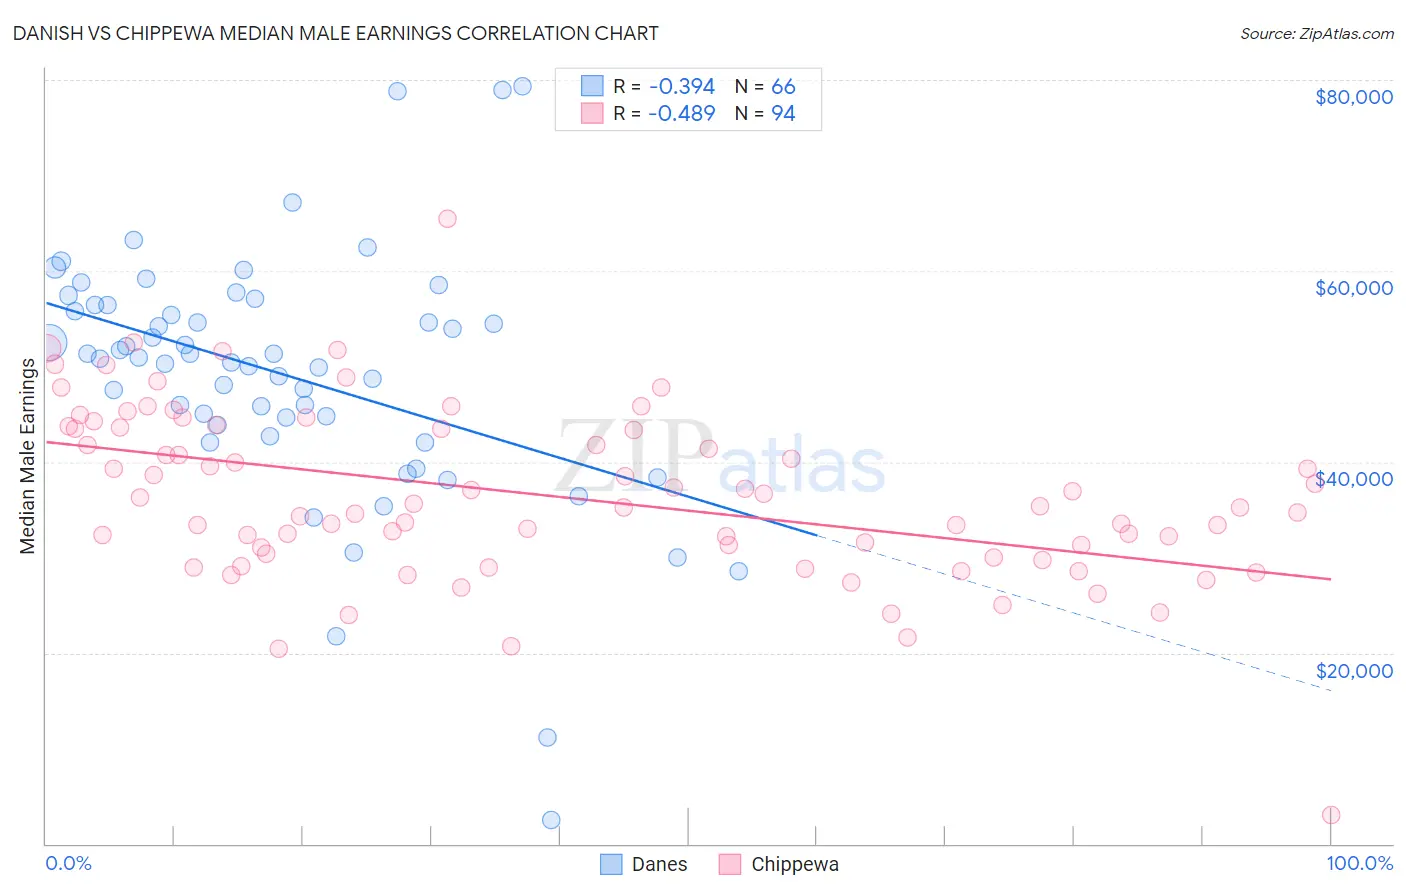 Danish vs Chippewa Median Male Earnings